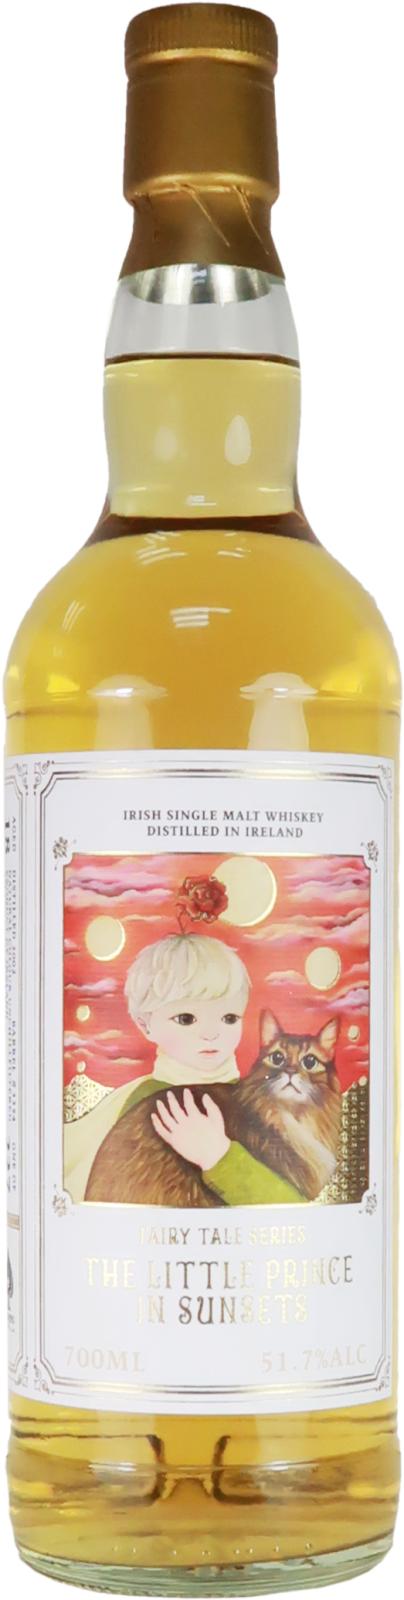 Irish Single Malt Whisky 2002 CQ Bourbon Barrel 51.7% 700ml